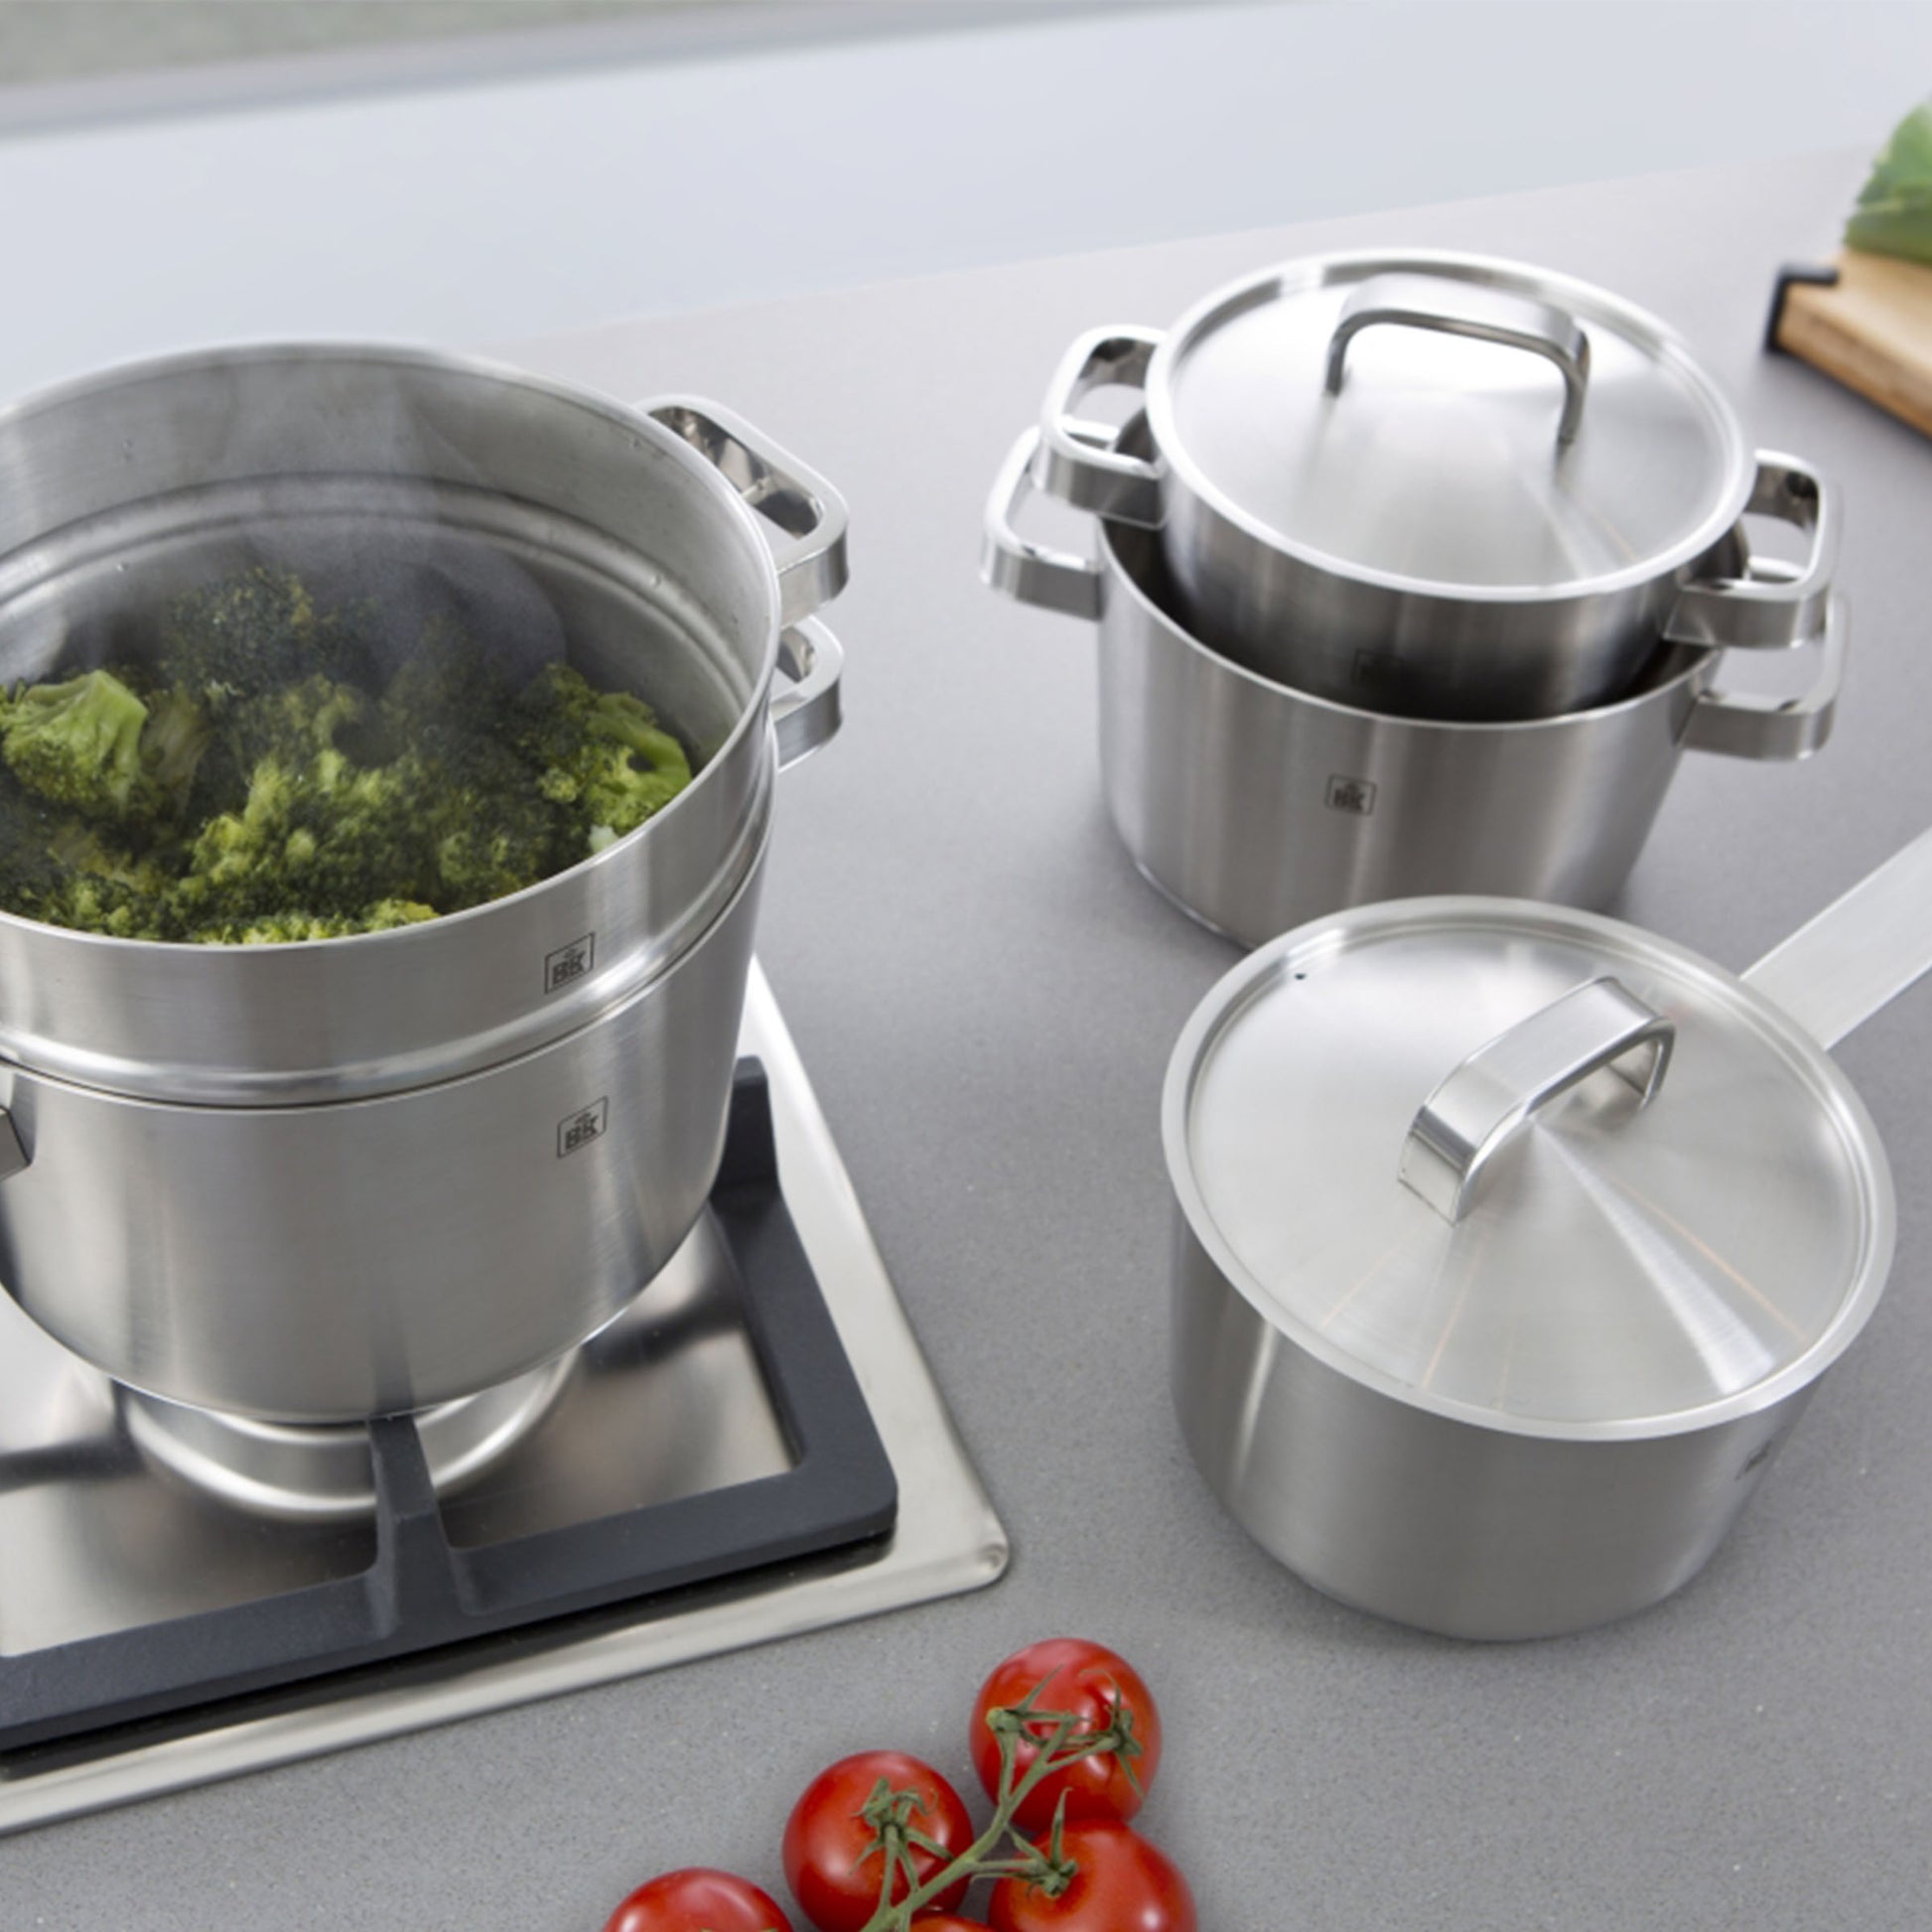 Conical + pannenset 5-delig & Allround koekenpan 24 cm + Allround wok 28 cm met broccoli